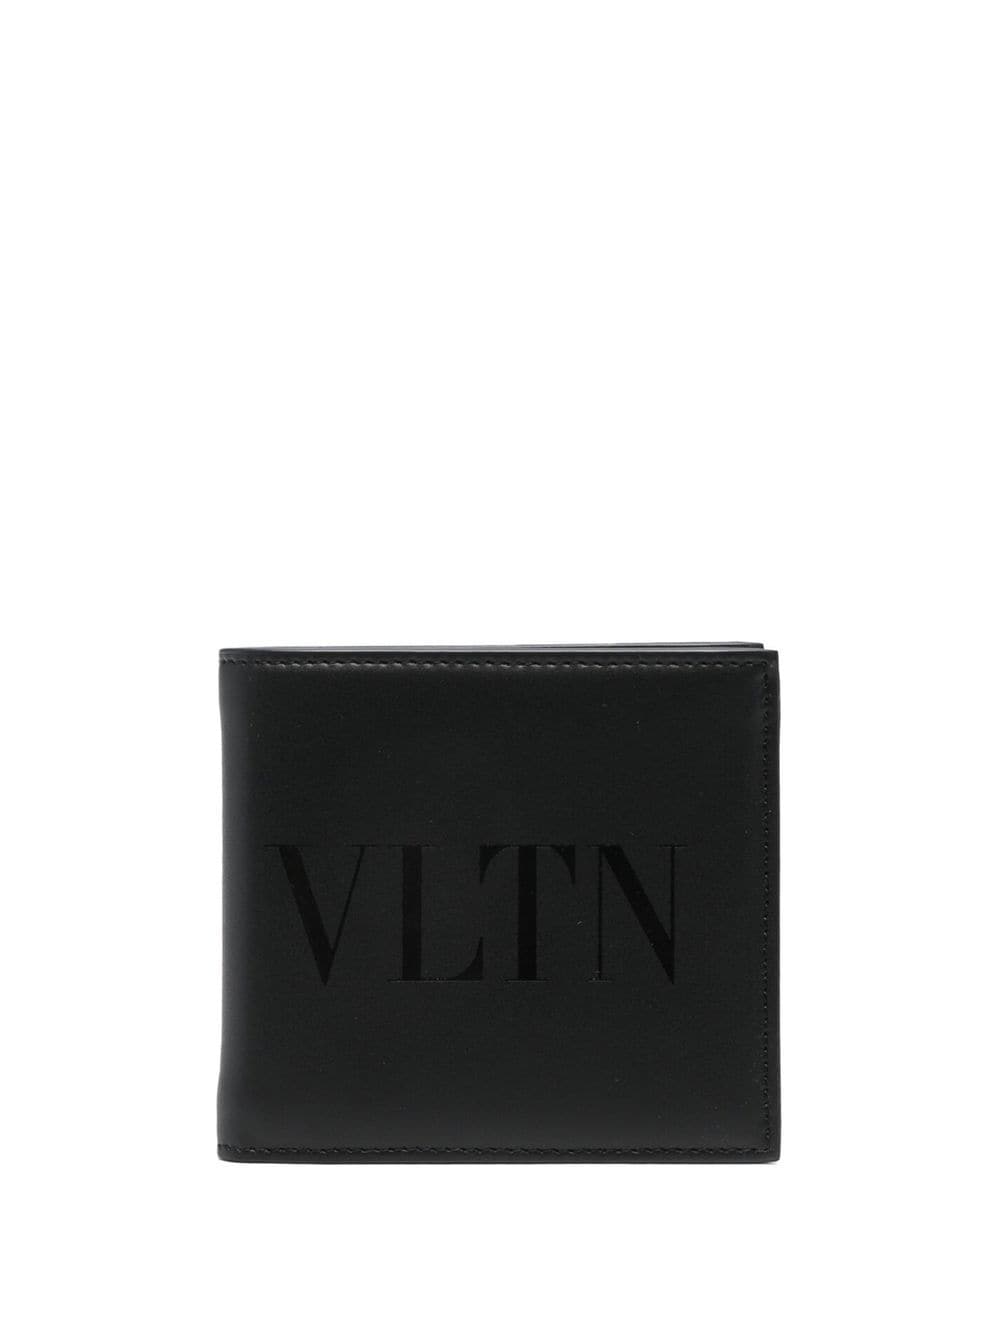 Valentino Garavani VLTN folded wallet - Black von Valentino Garavani